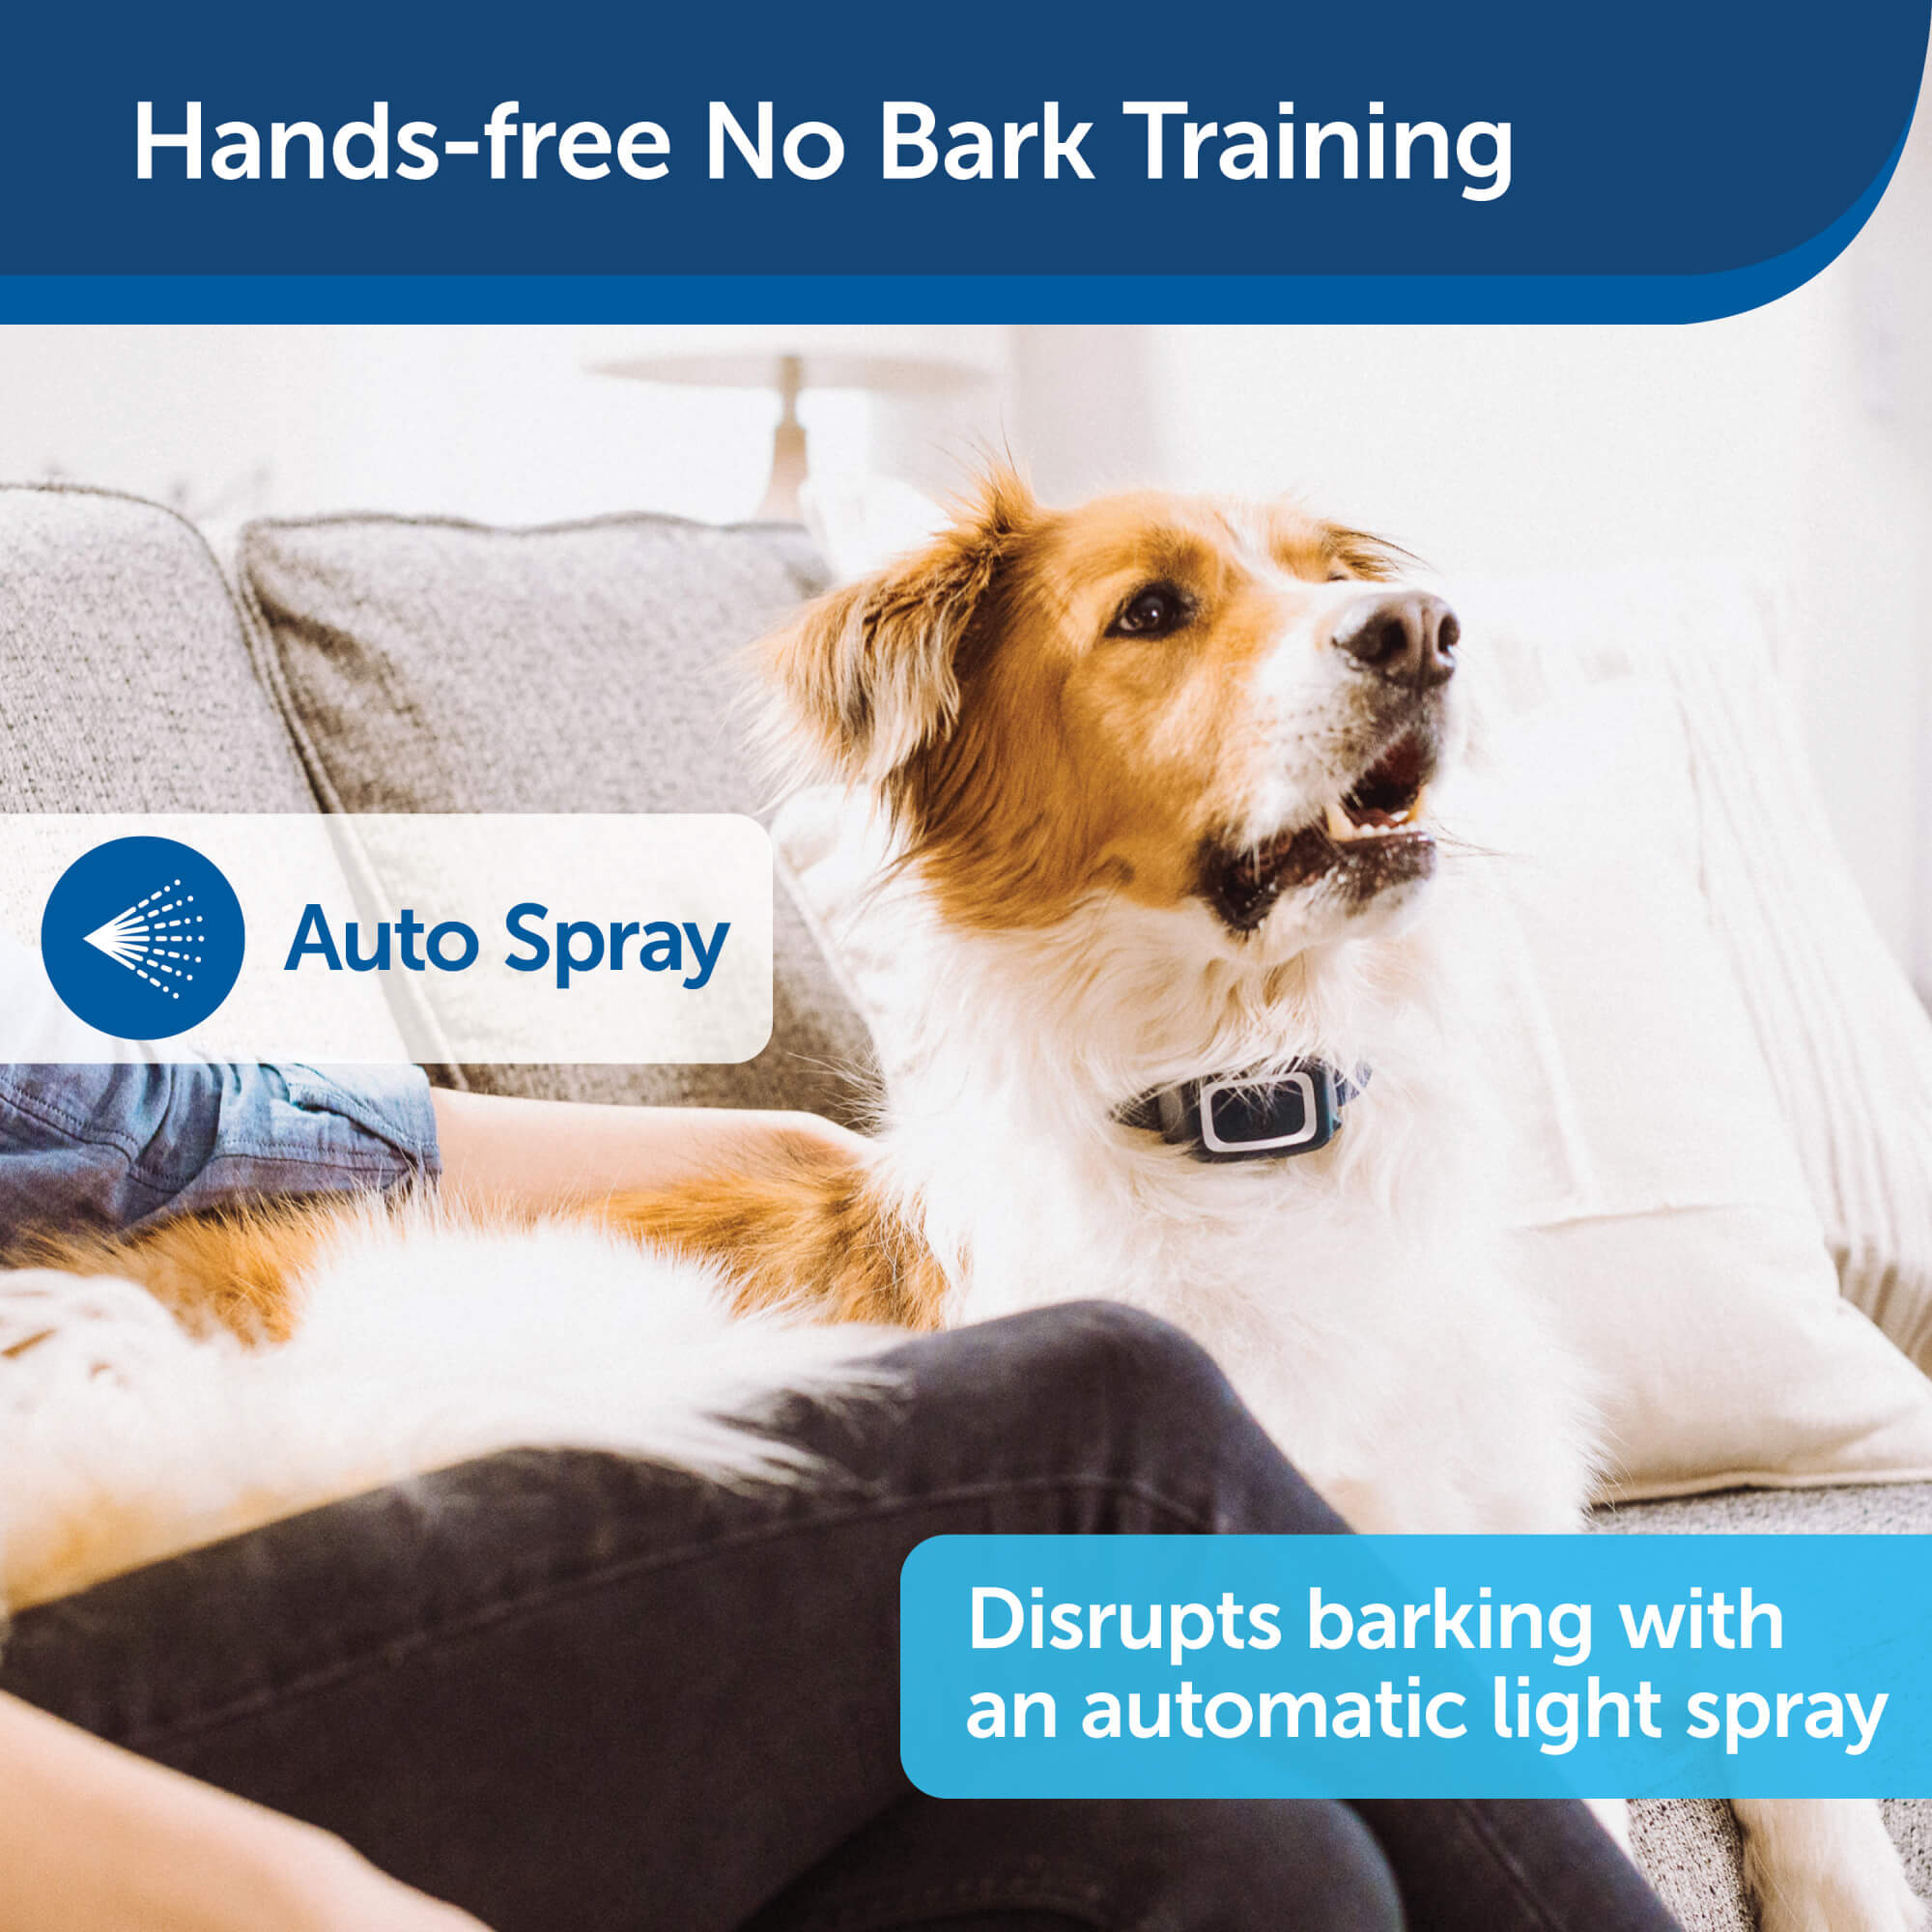 Hands-free no bark training